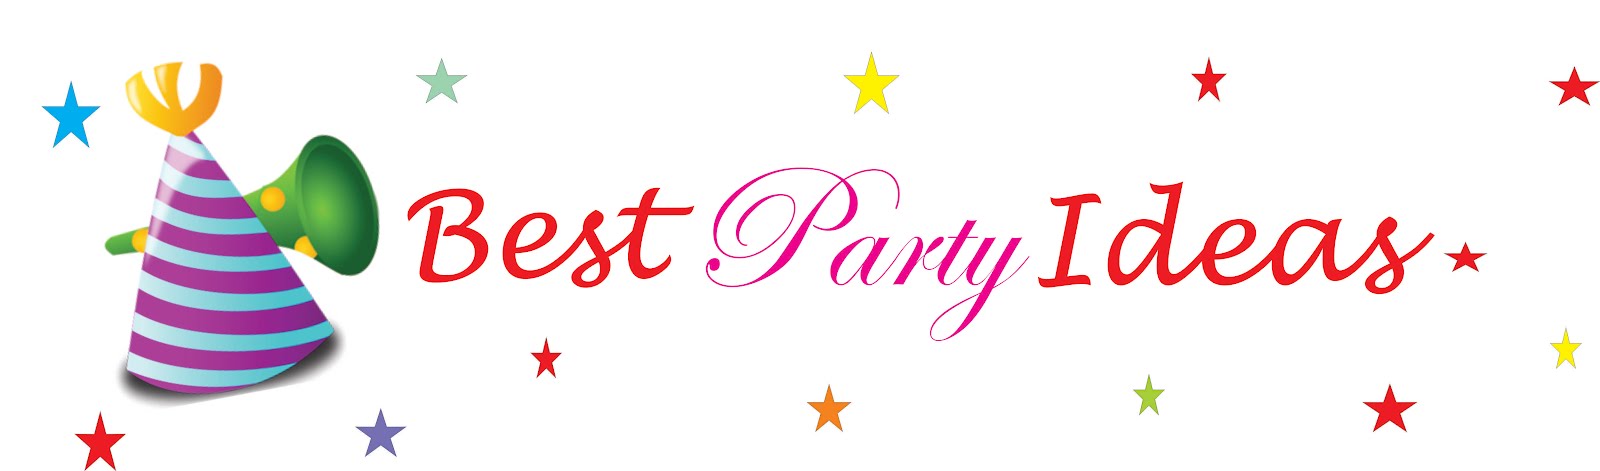 Best Party Ideas